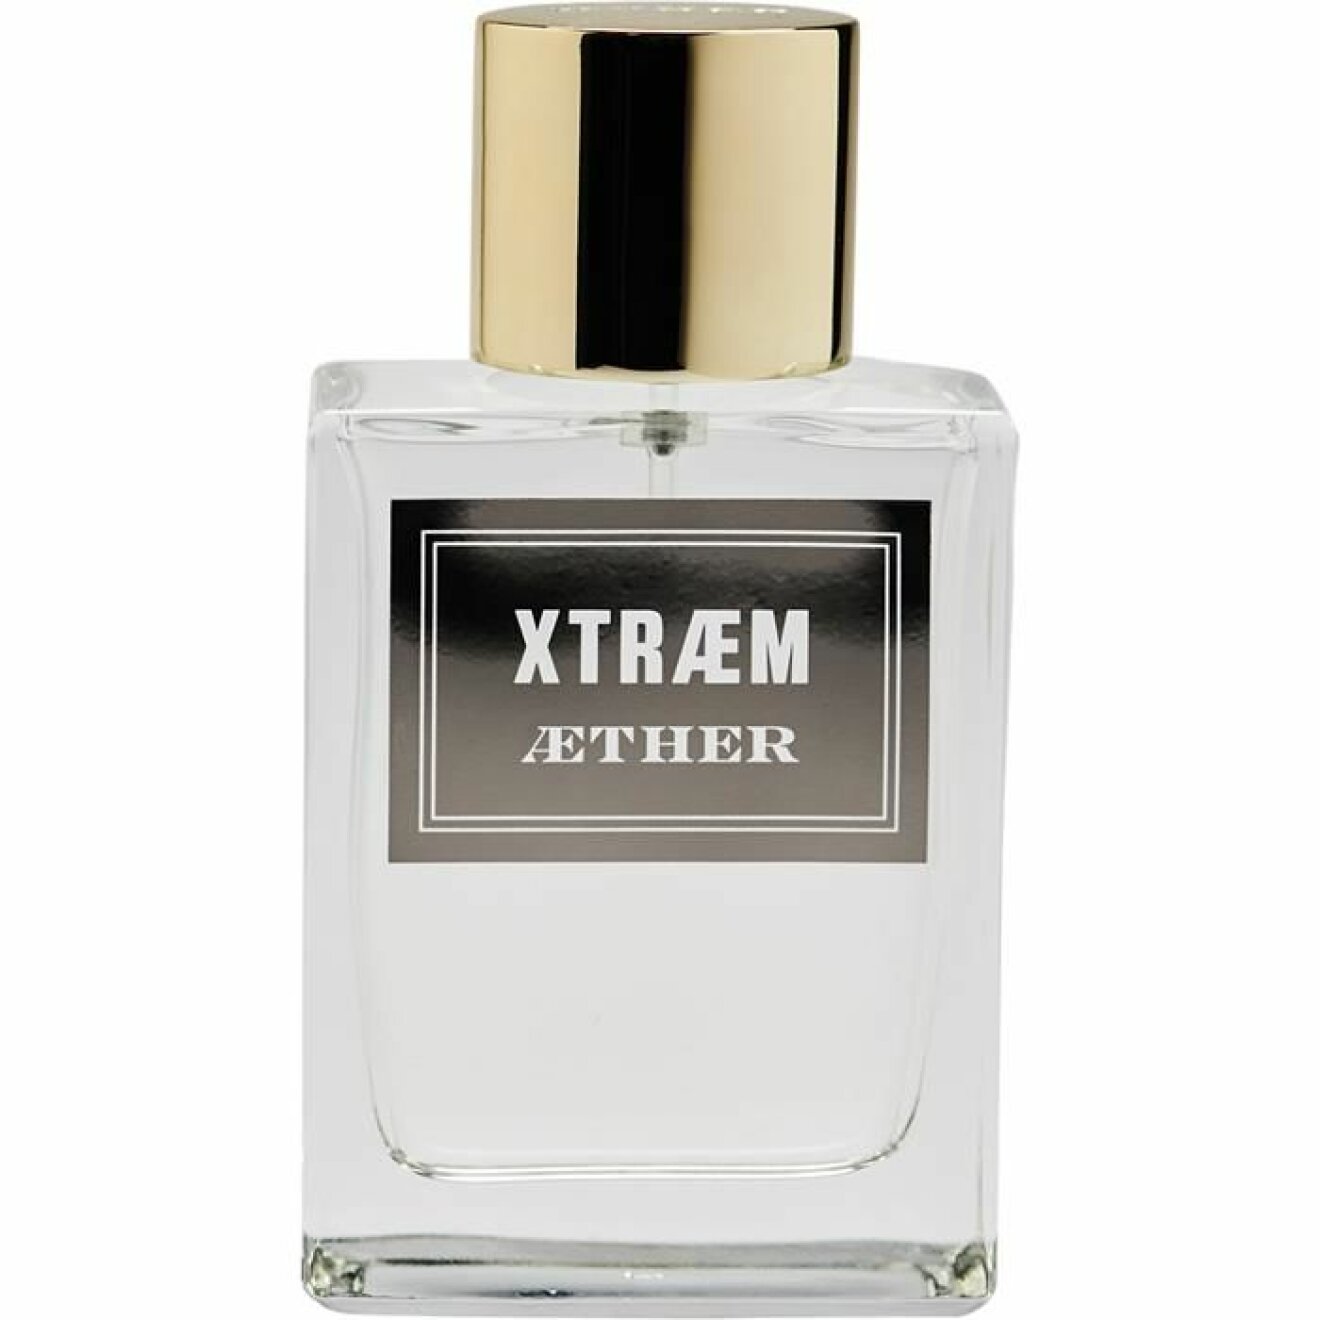 Parfymen Xtraem från Aether.